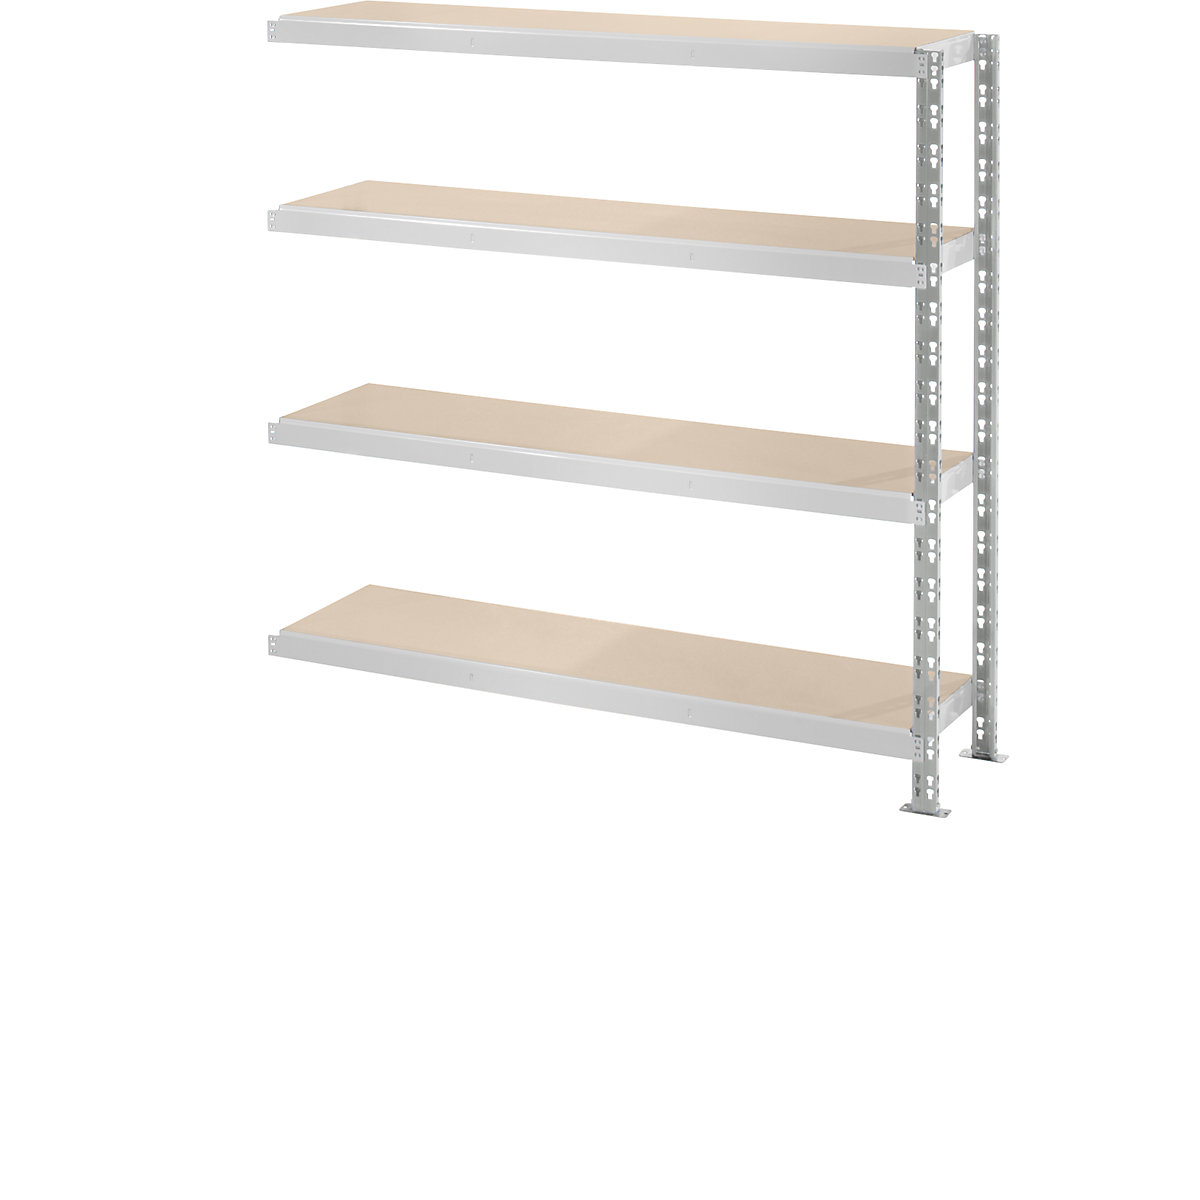 Wide span boltless shelf unit with moulded chipboard shelves, depth 400 mm, extension shelf unit, HxW 1508 x 1525 mm